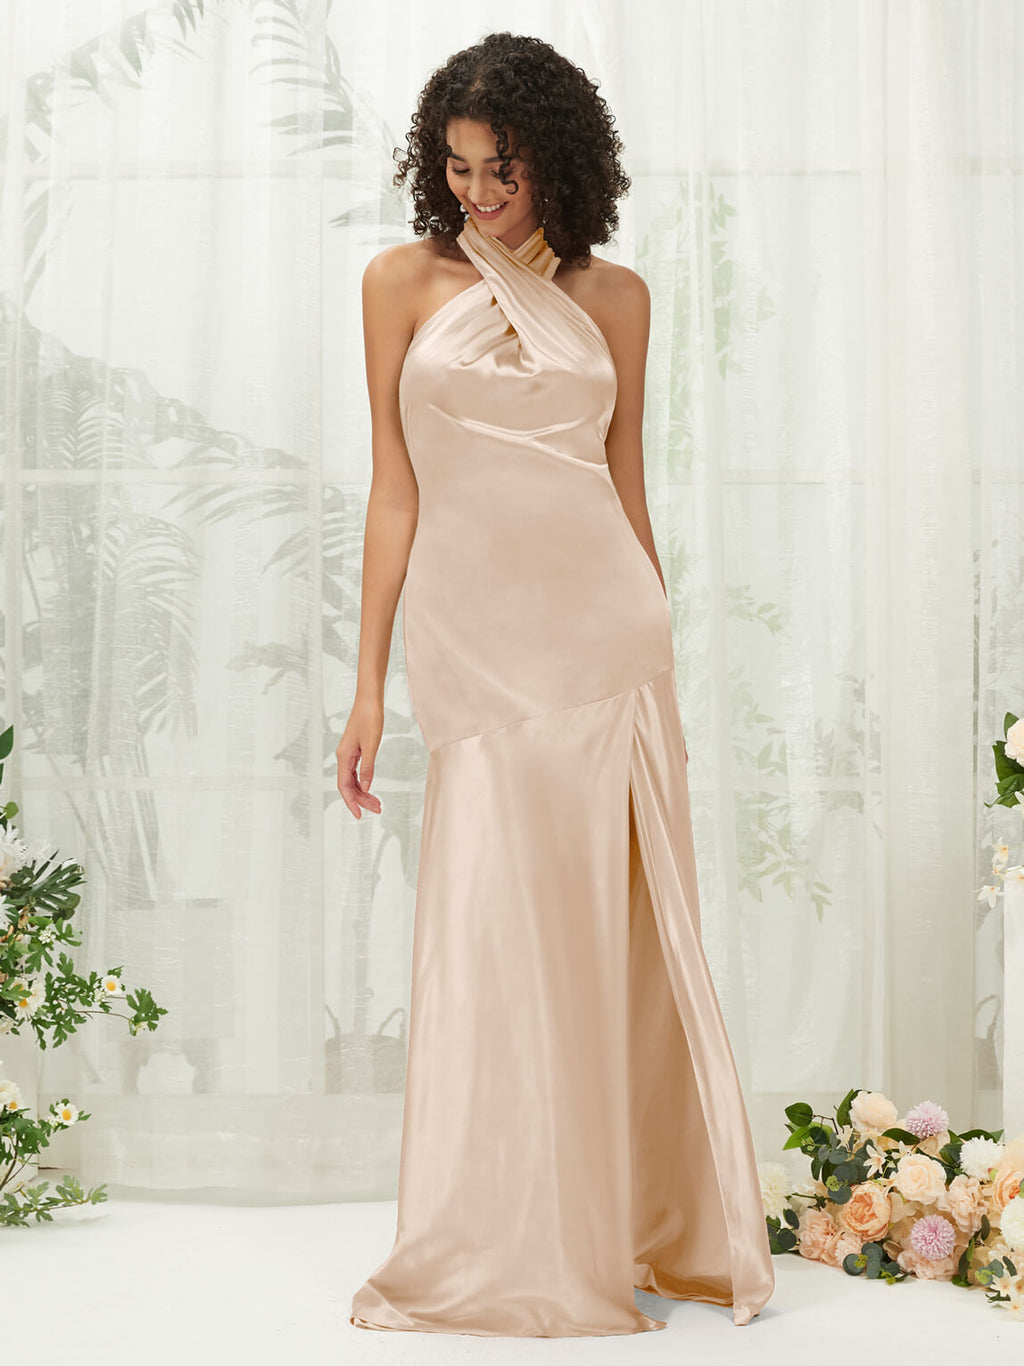 Champagne Halter Sleeveless Satin bridesmaid dresses R30517 Athena NZ Bridal a